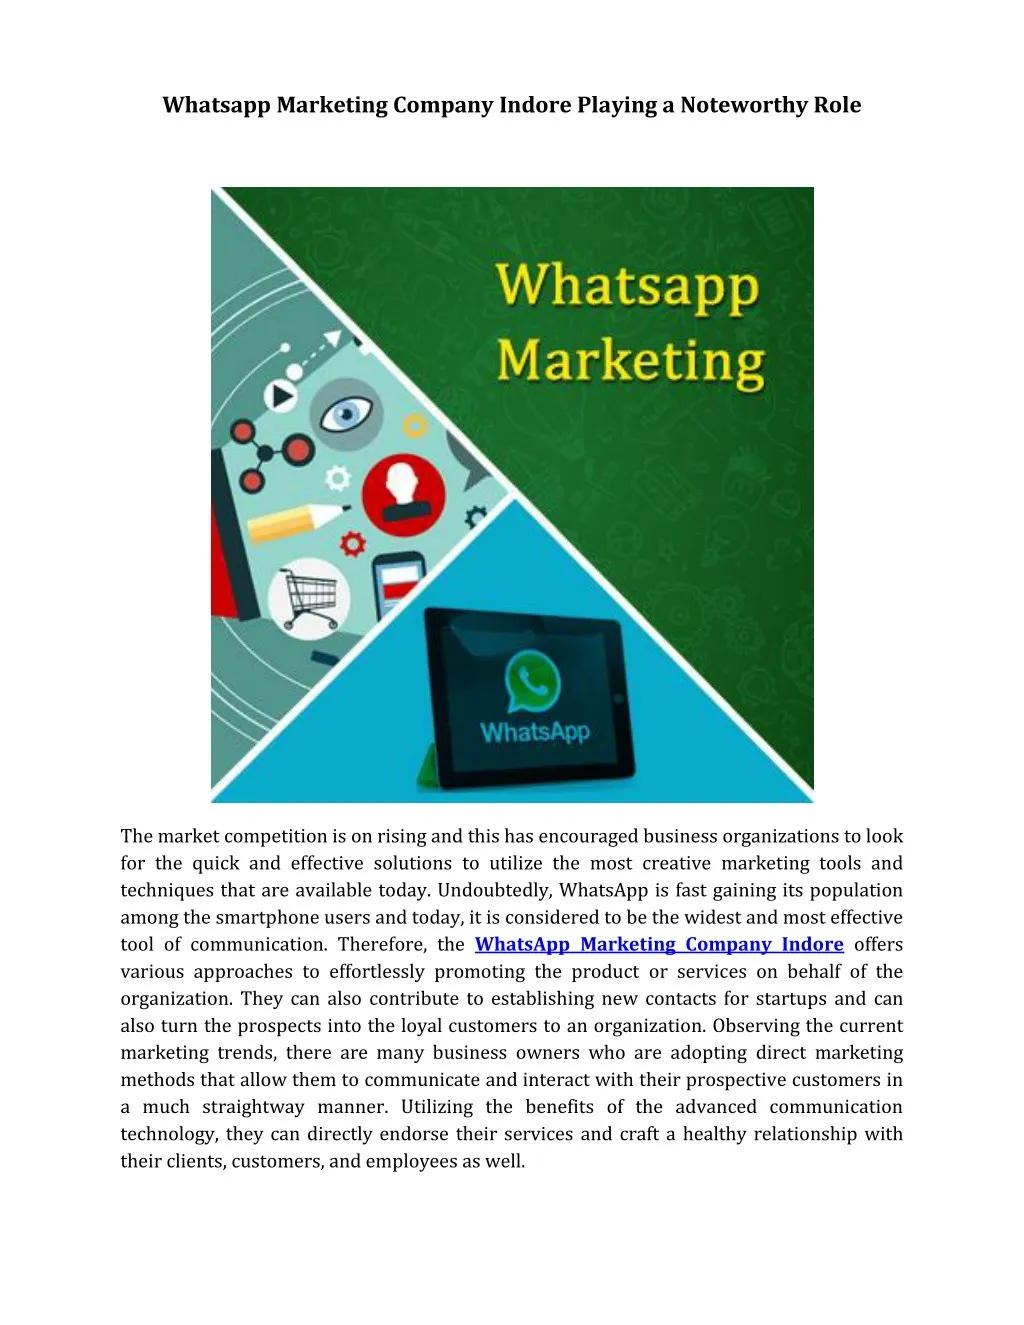 whatsapp marketing company indore playing